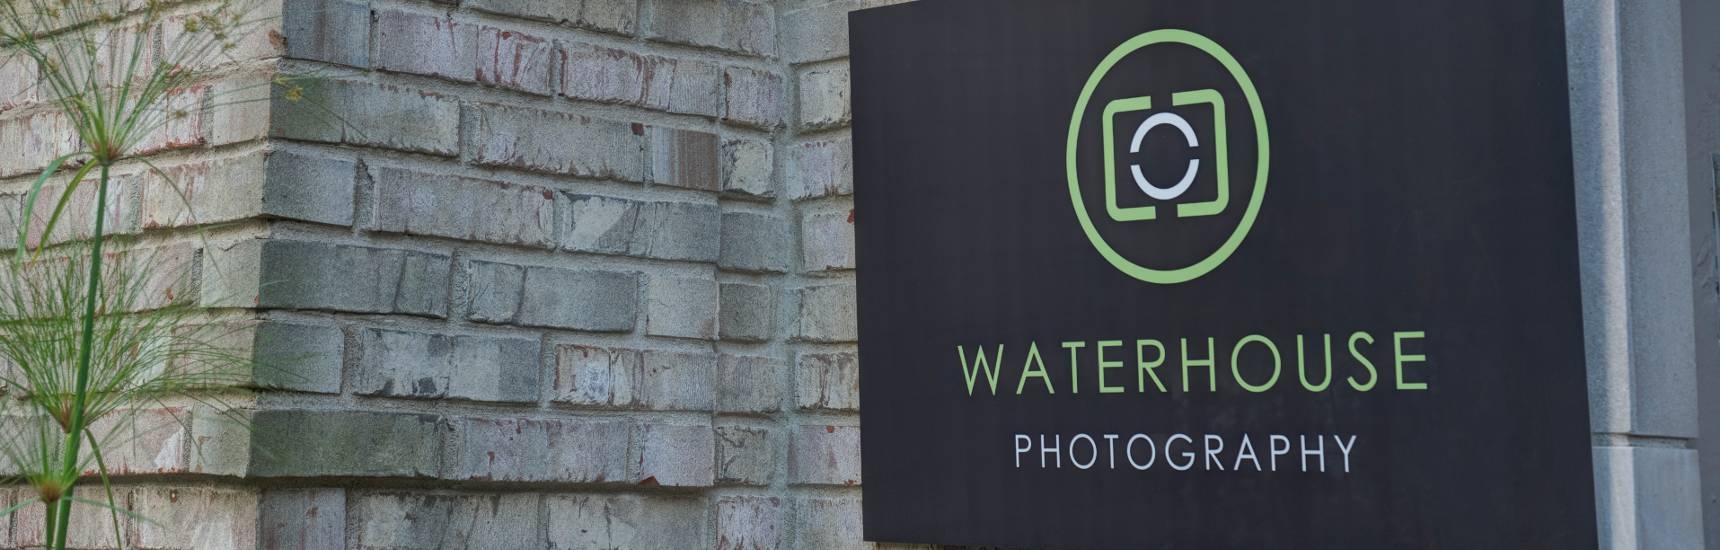 Signboard of Waterhouse Photography